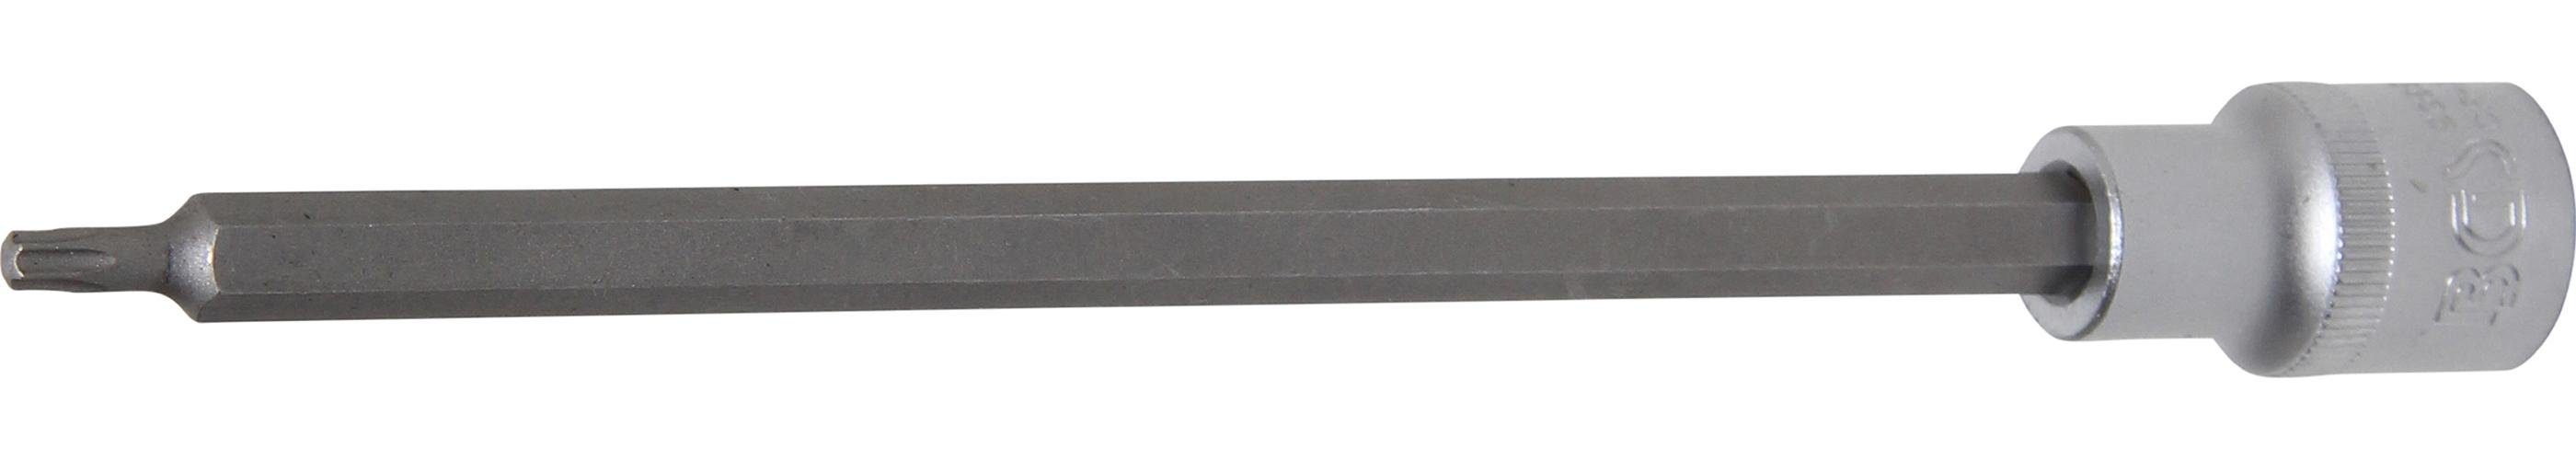 BGS technic Länge (1/2), Bit-Schraubendreher 200 mm Antrieb Torx) Bit-Einsatz, Innenvierkant T-Profil (für T25 mm, 12,5